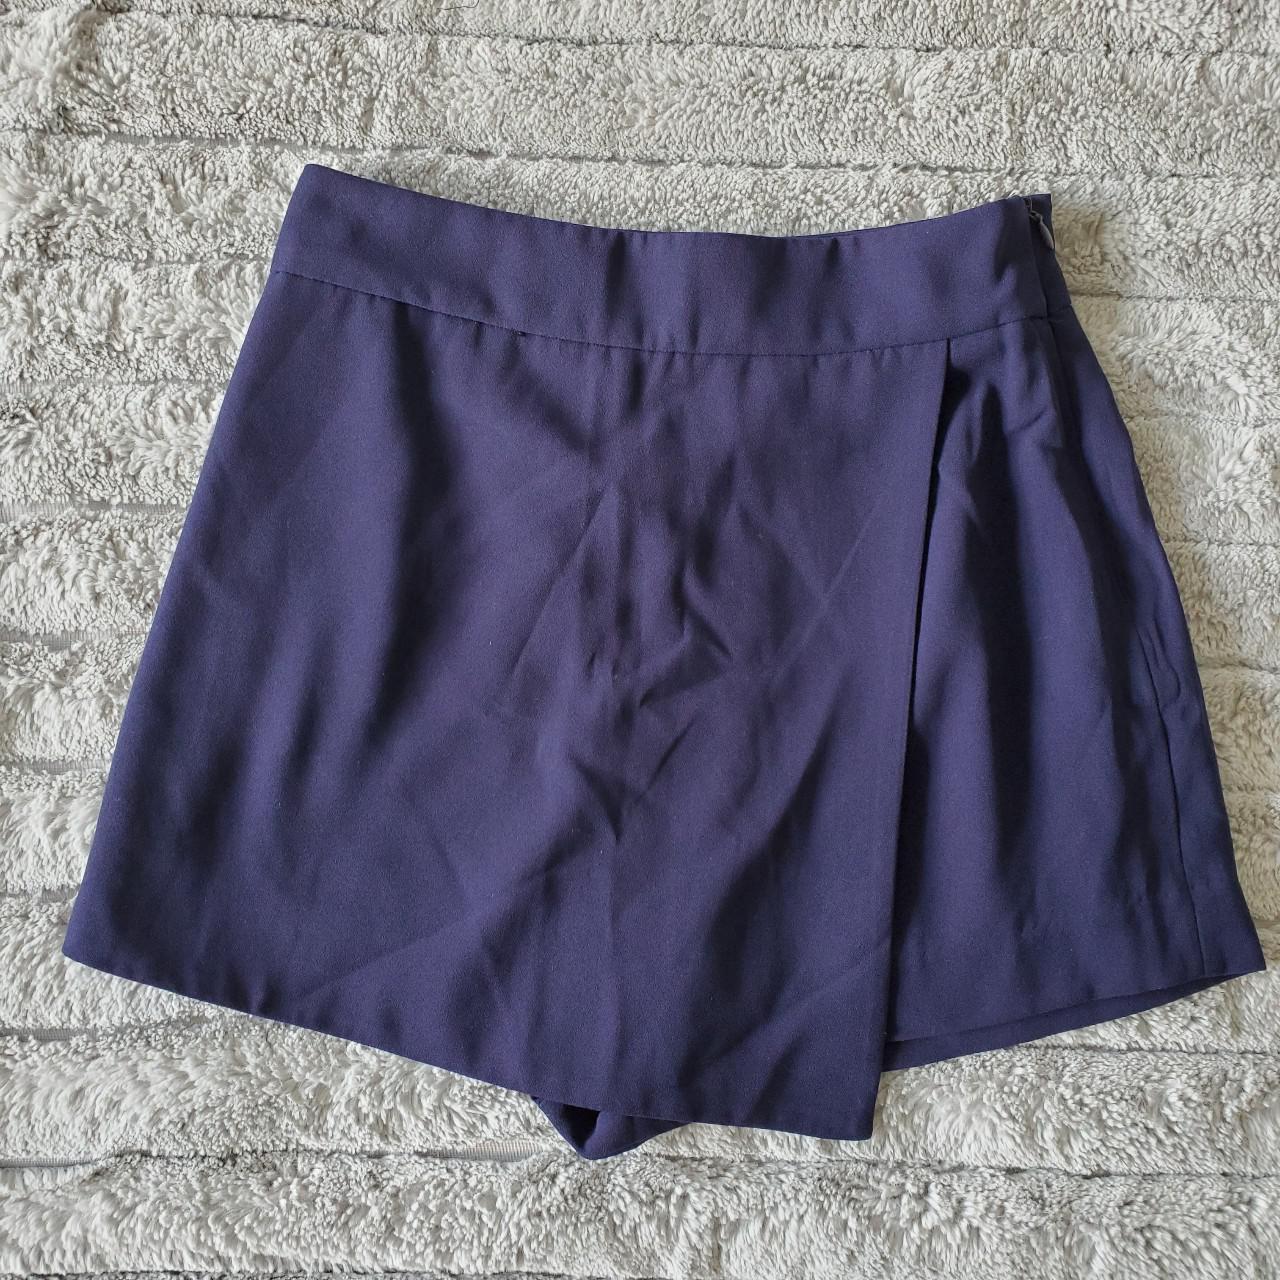 Dressy Skort Navy blue skirt with side zipper. - Depop